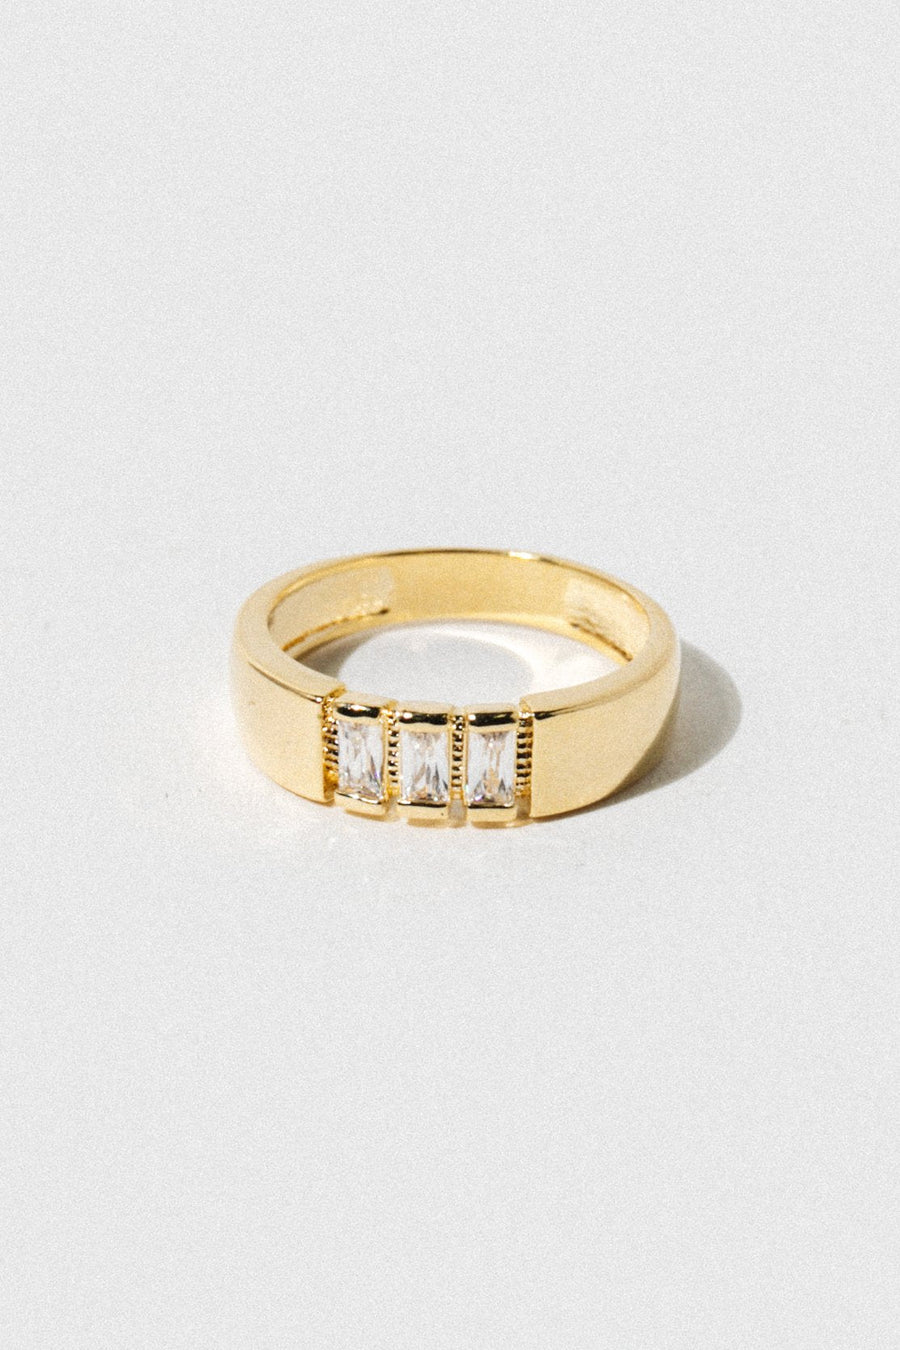 Dona Italia Jewelry US 6 / Gold Trine Ring